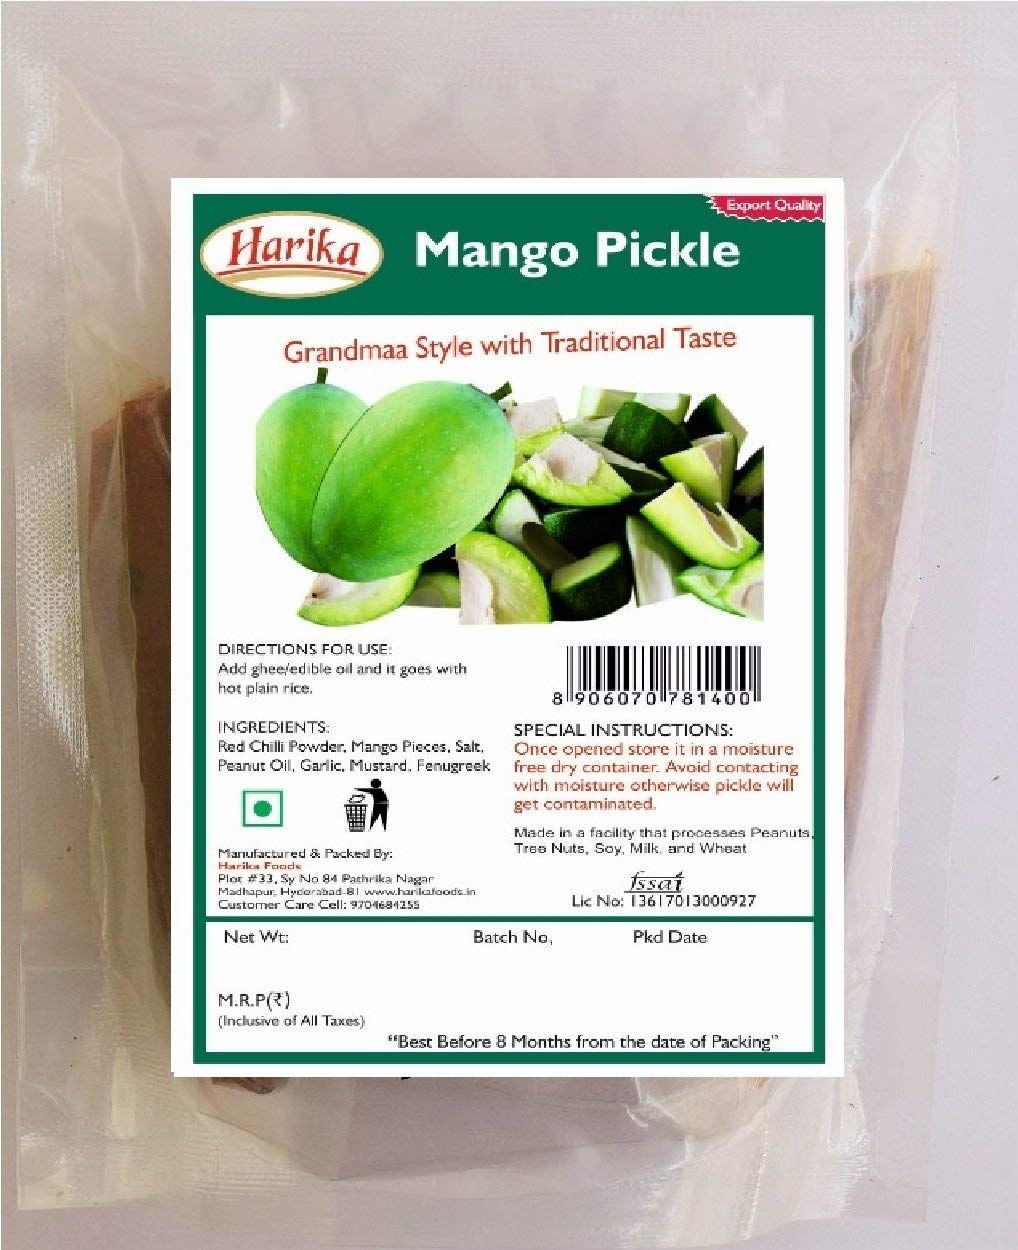 Harika Mango Pickle Image